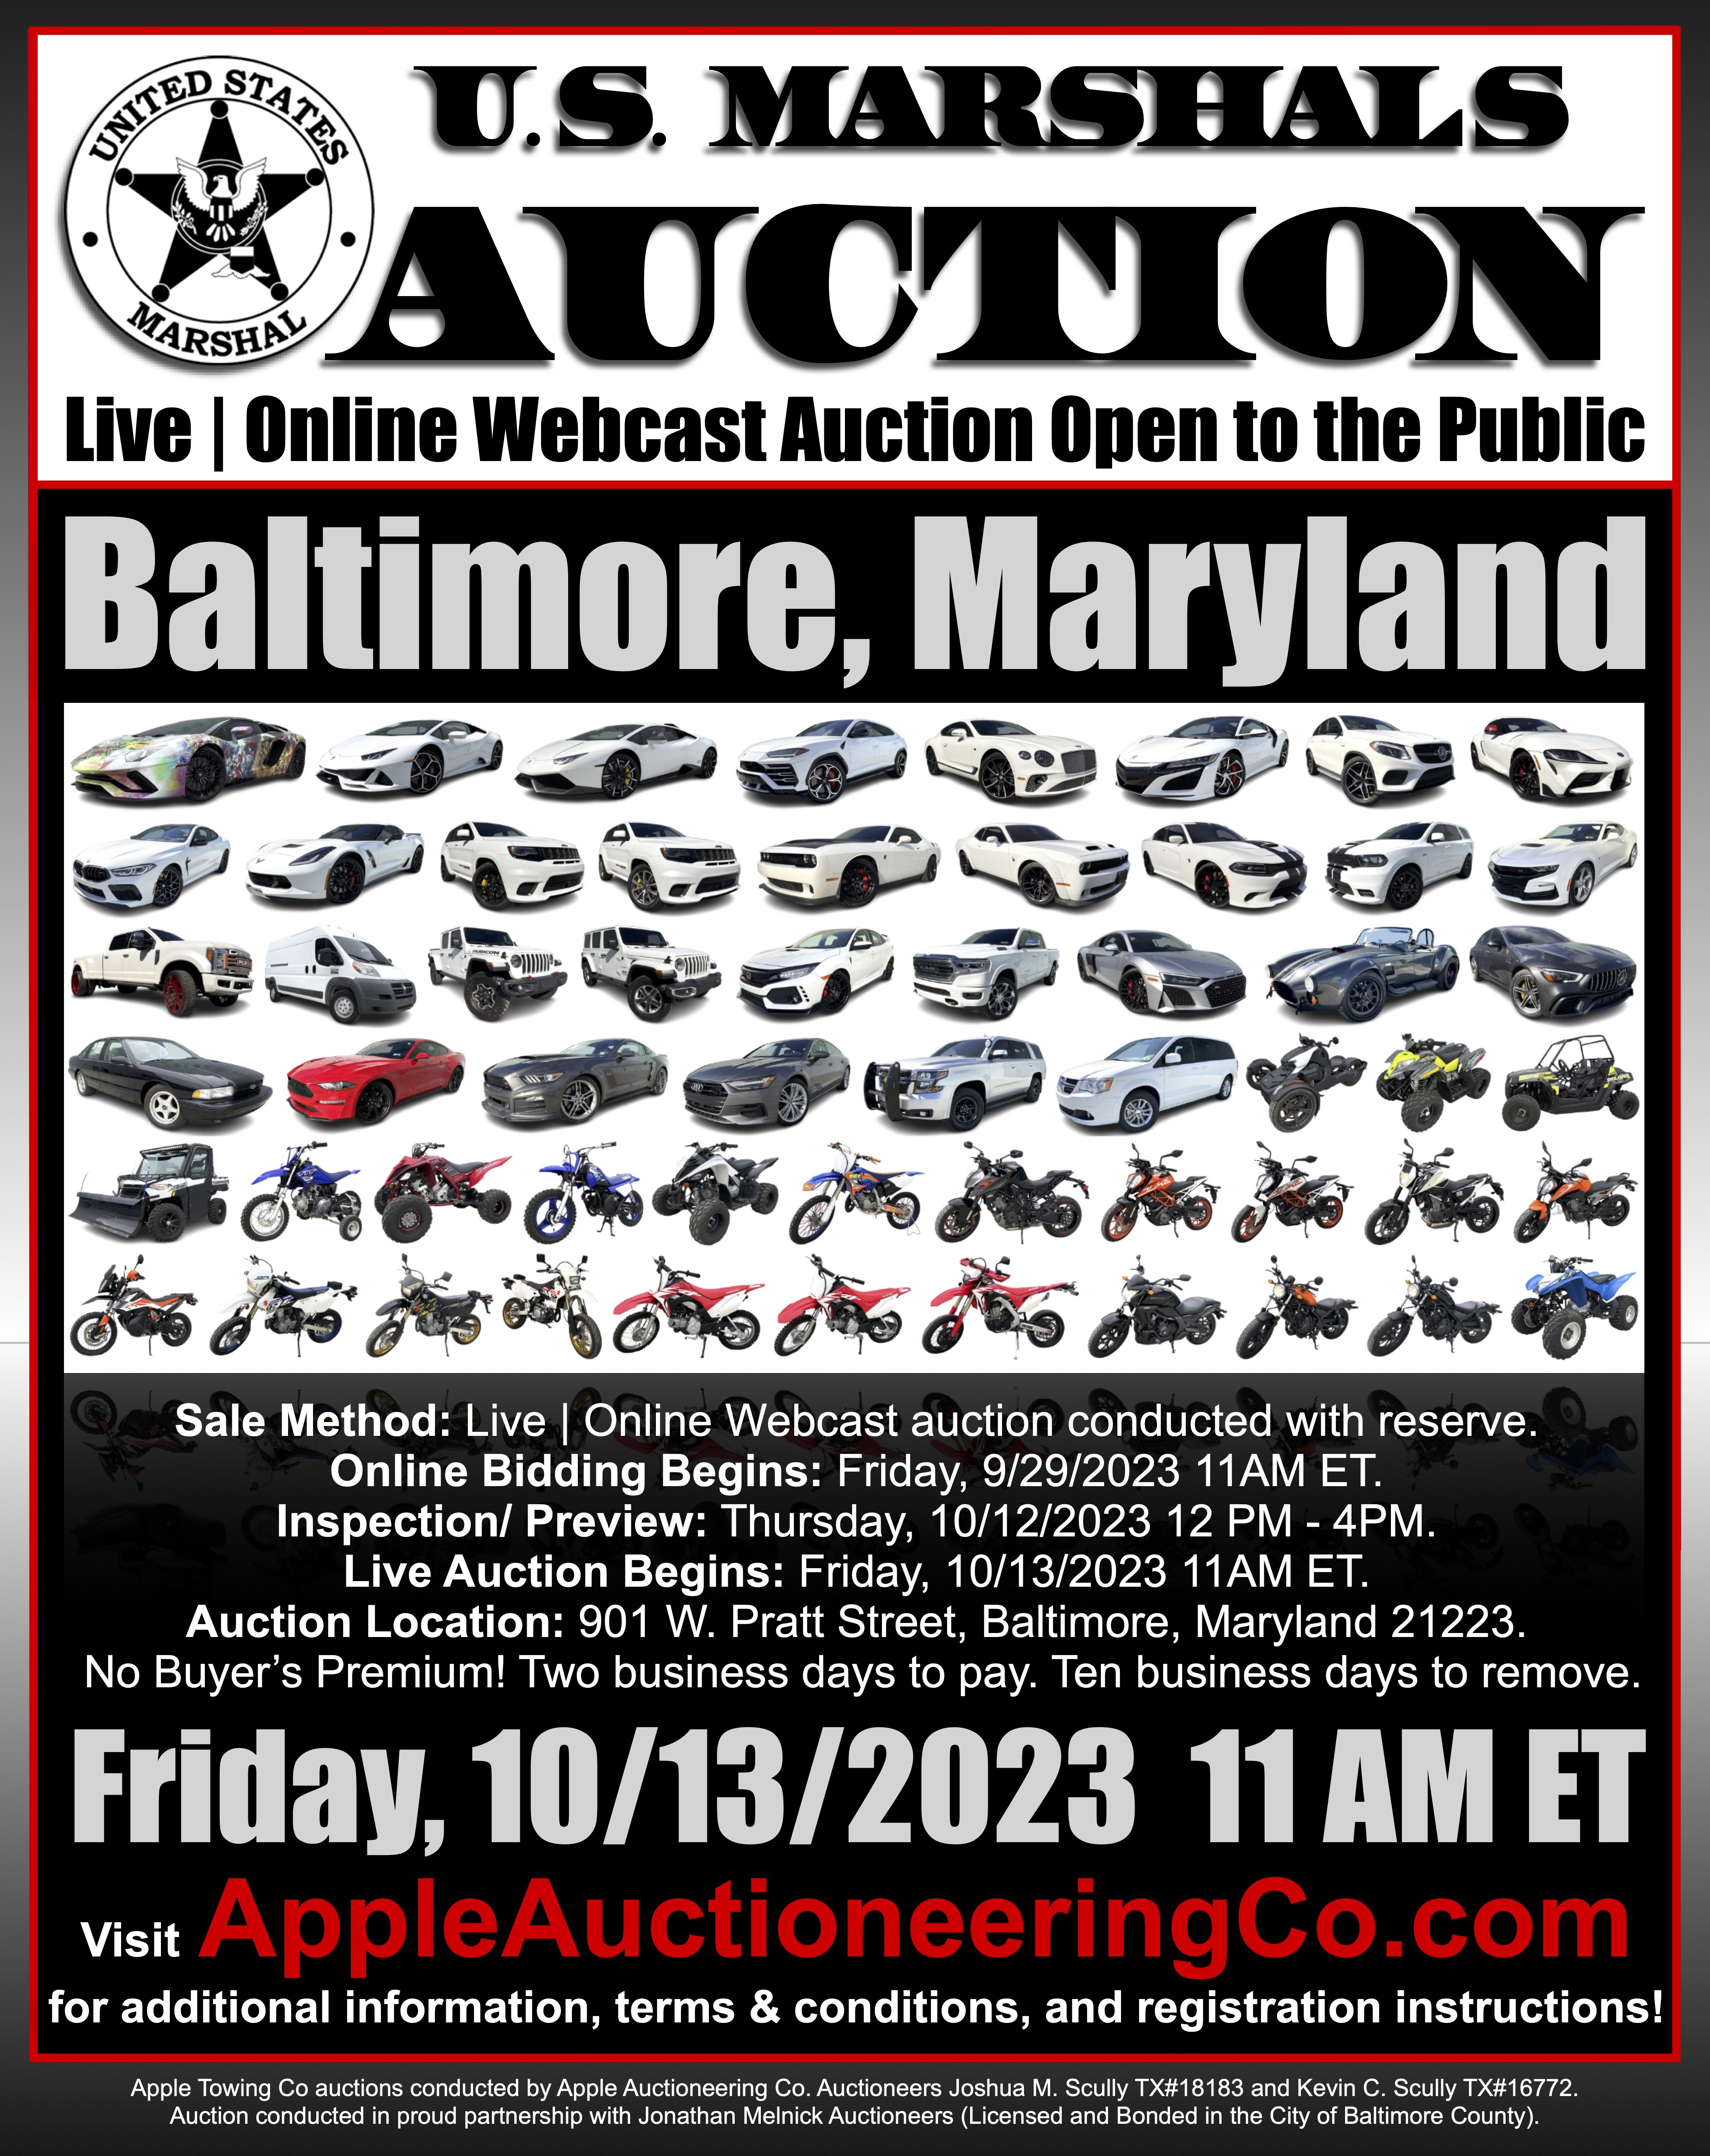 U.S. Marshals Accessories Auction